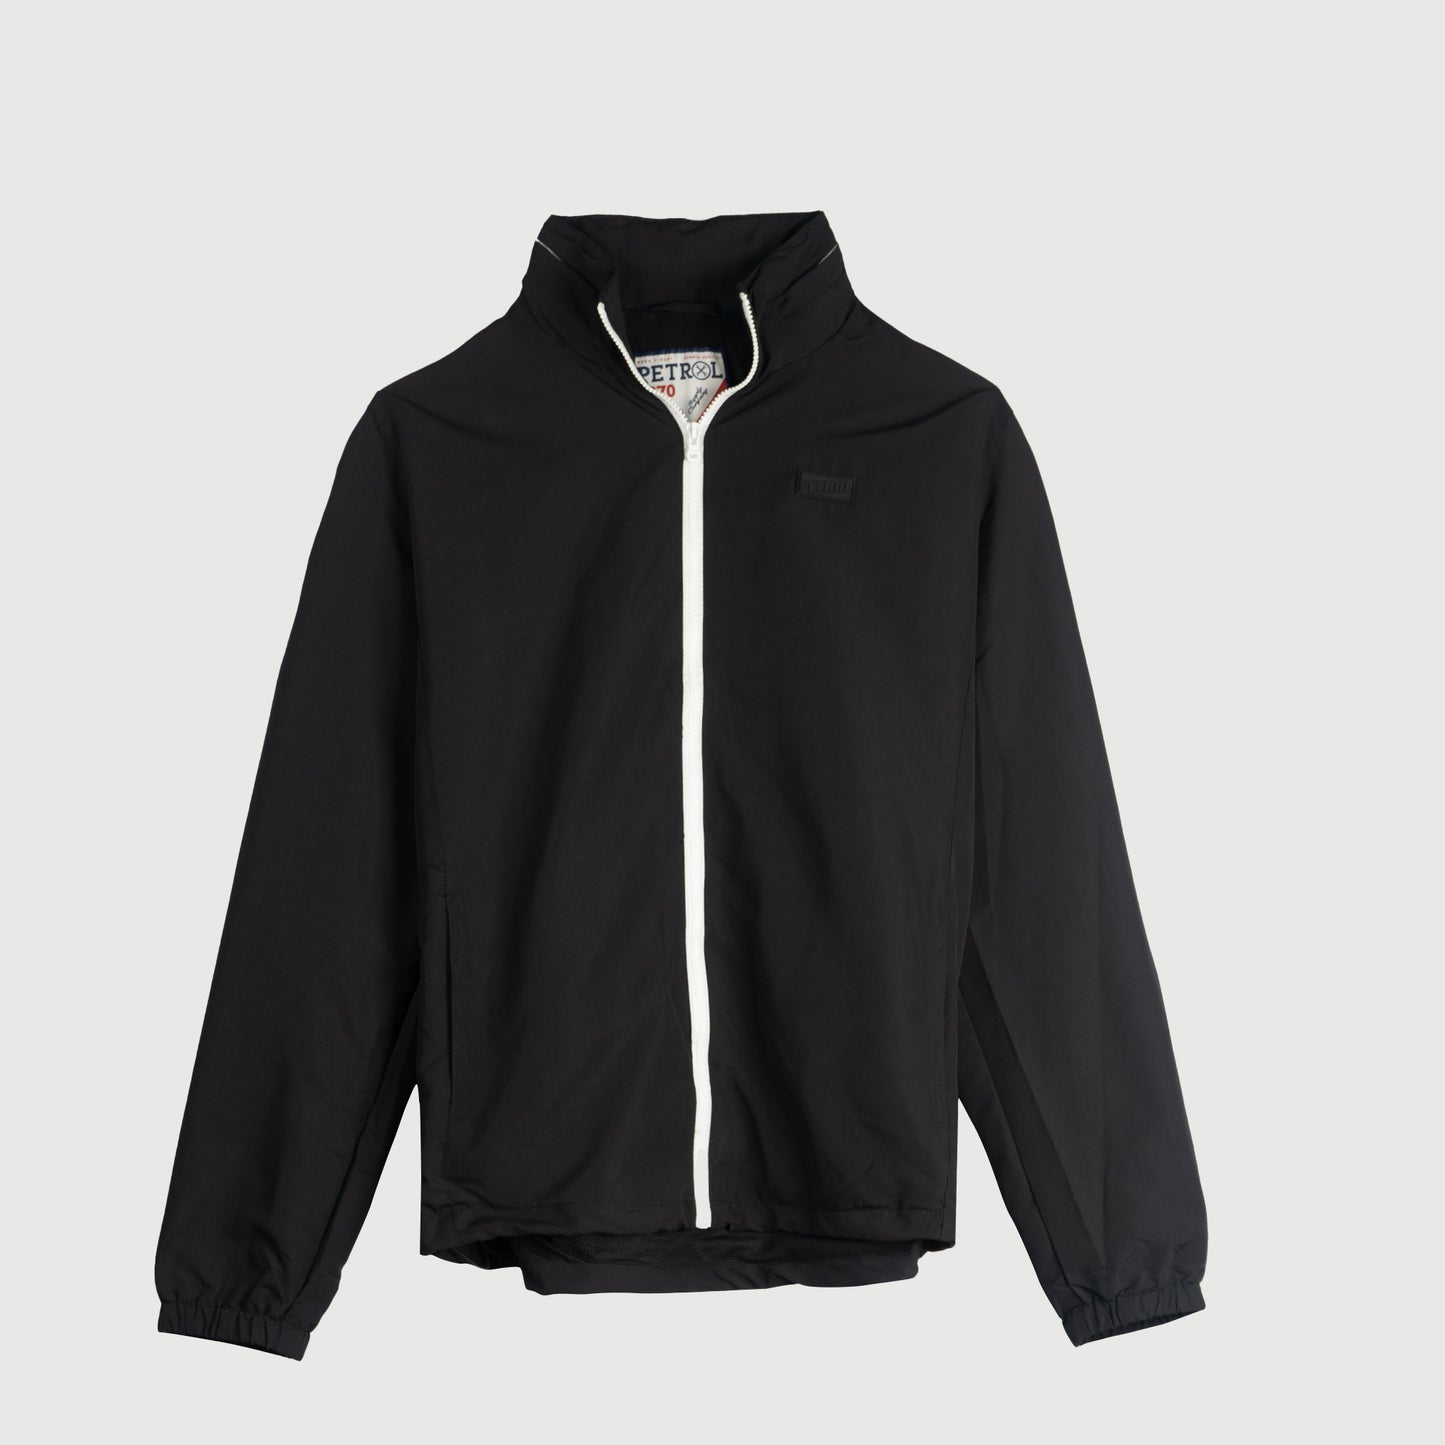 Petrol Basic Jacket for Men Regular Fitting Nylon Fabric Trendy fashion Casual Top Black Jacket for Men 130689 (Black)